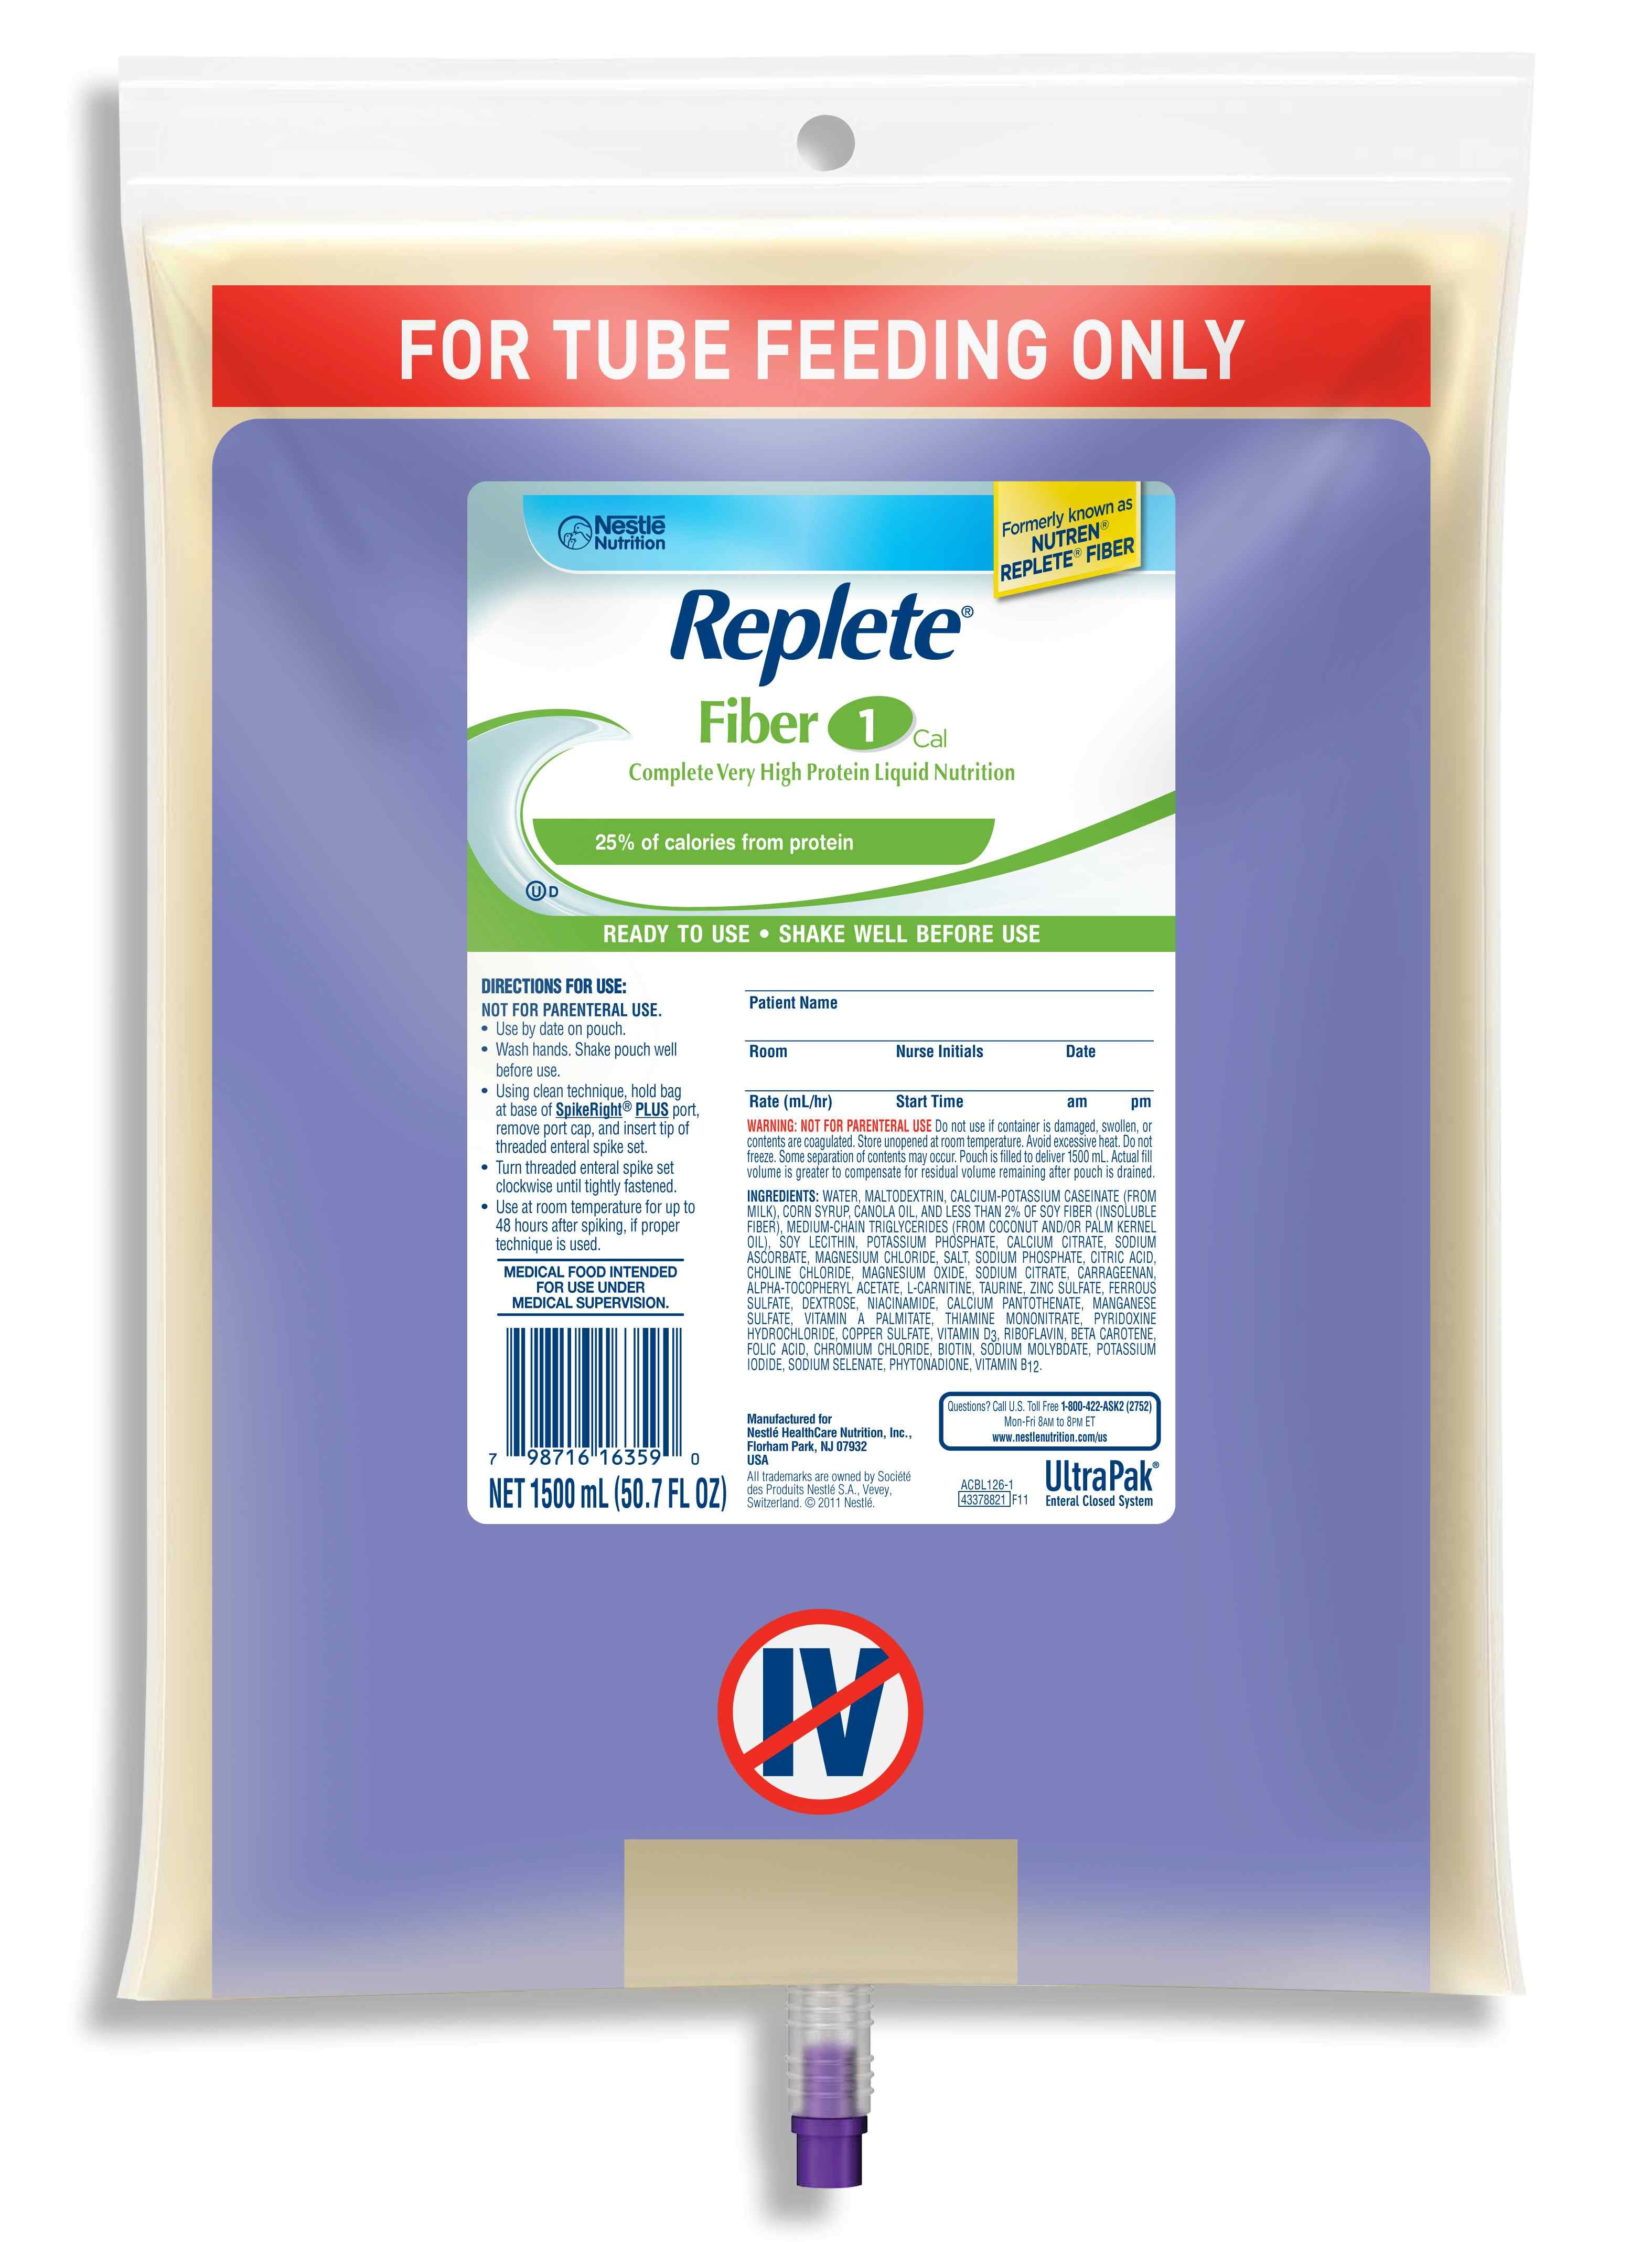 Nestle HealthScience Replete Fiber Very High Protein Complete Nutrition with Fiber Tube Feeding Formula, 10798716263594, 50.7 oz. - Case of 4